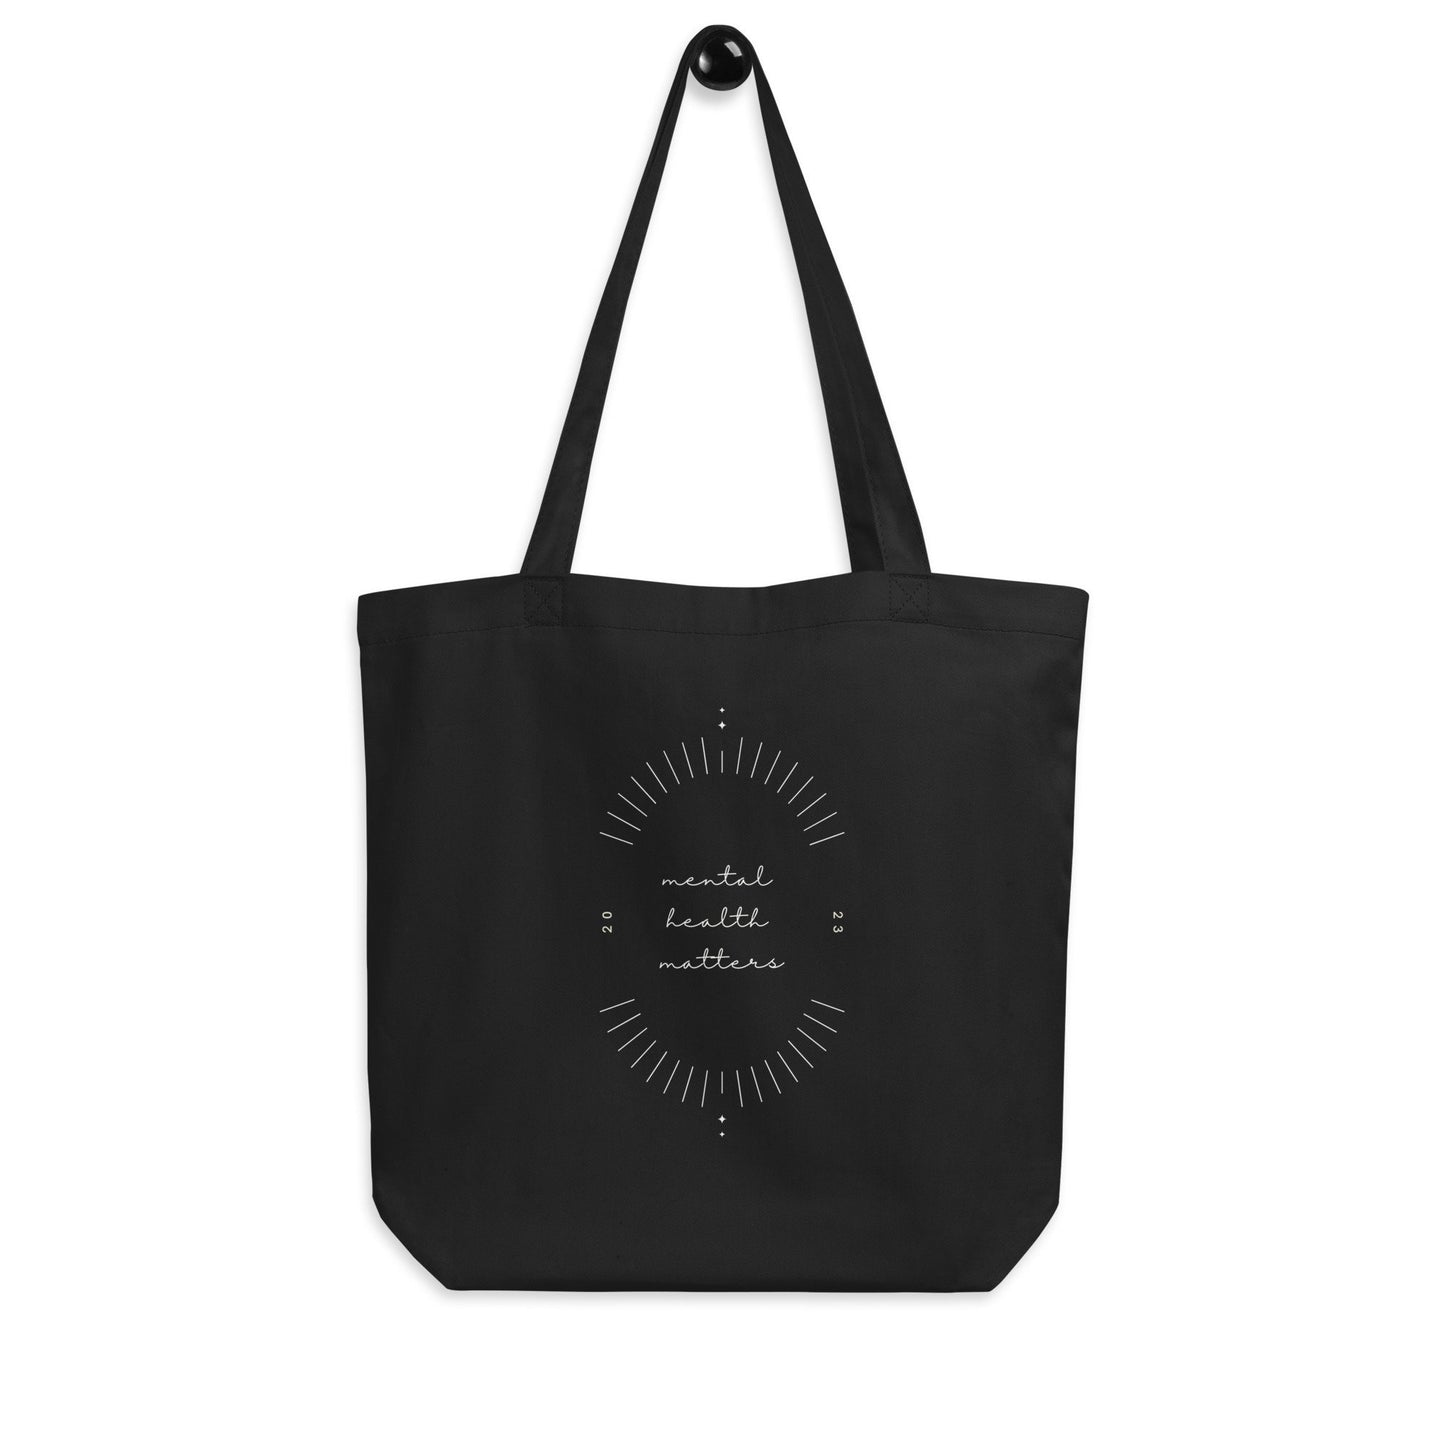 Mental Health Matters minimalist Tote Bag